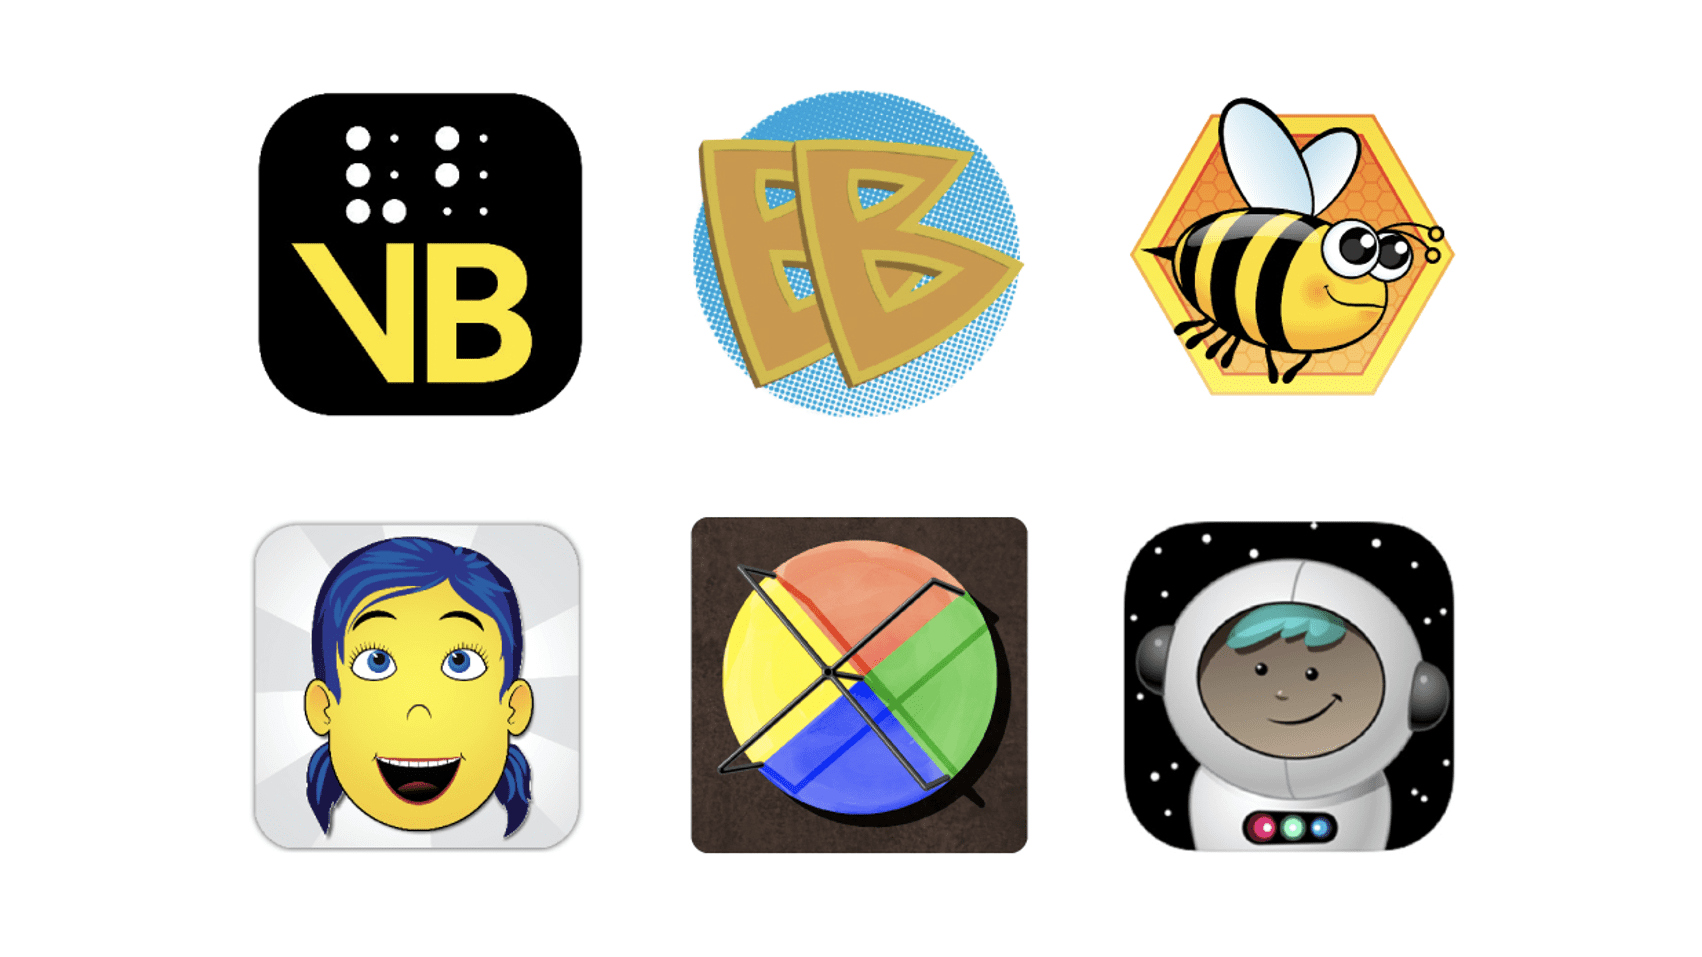 Freebie -random house stuff icons - Building Better Courses